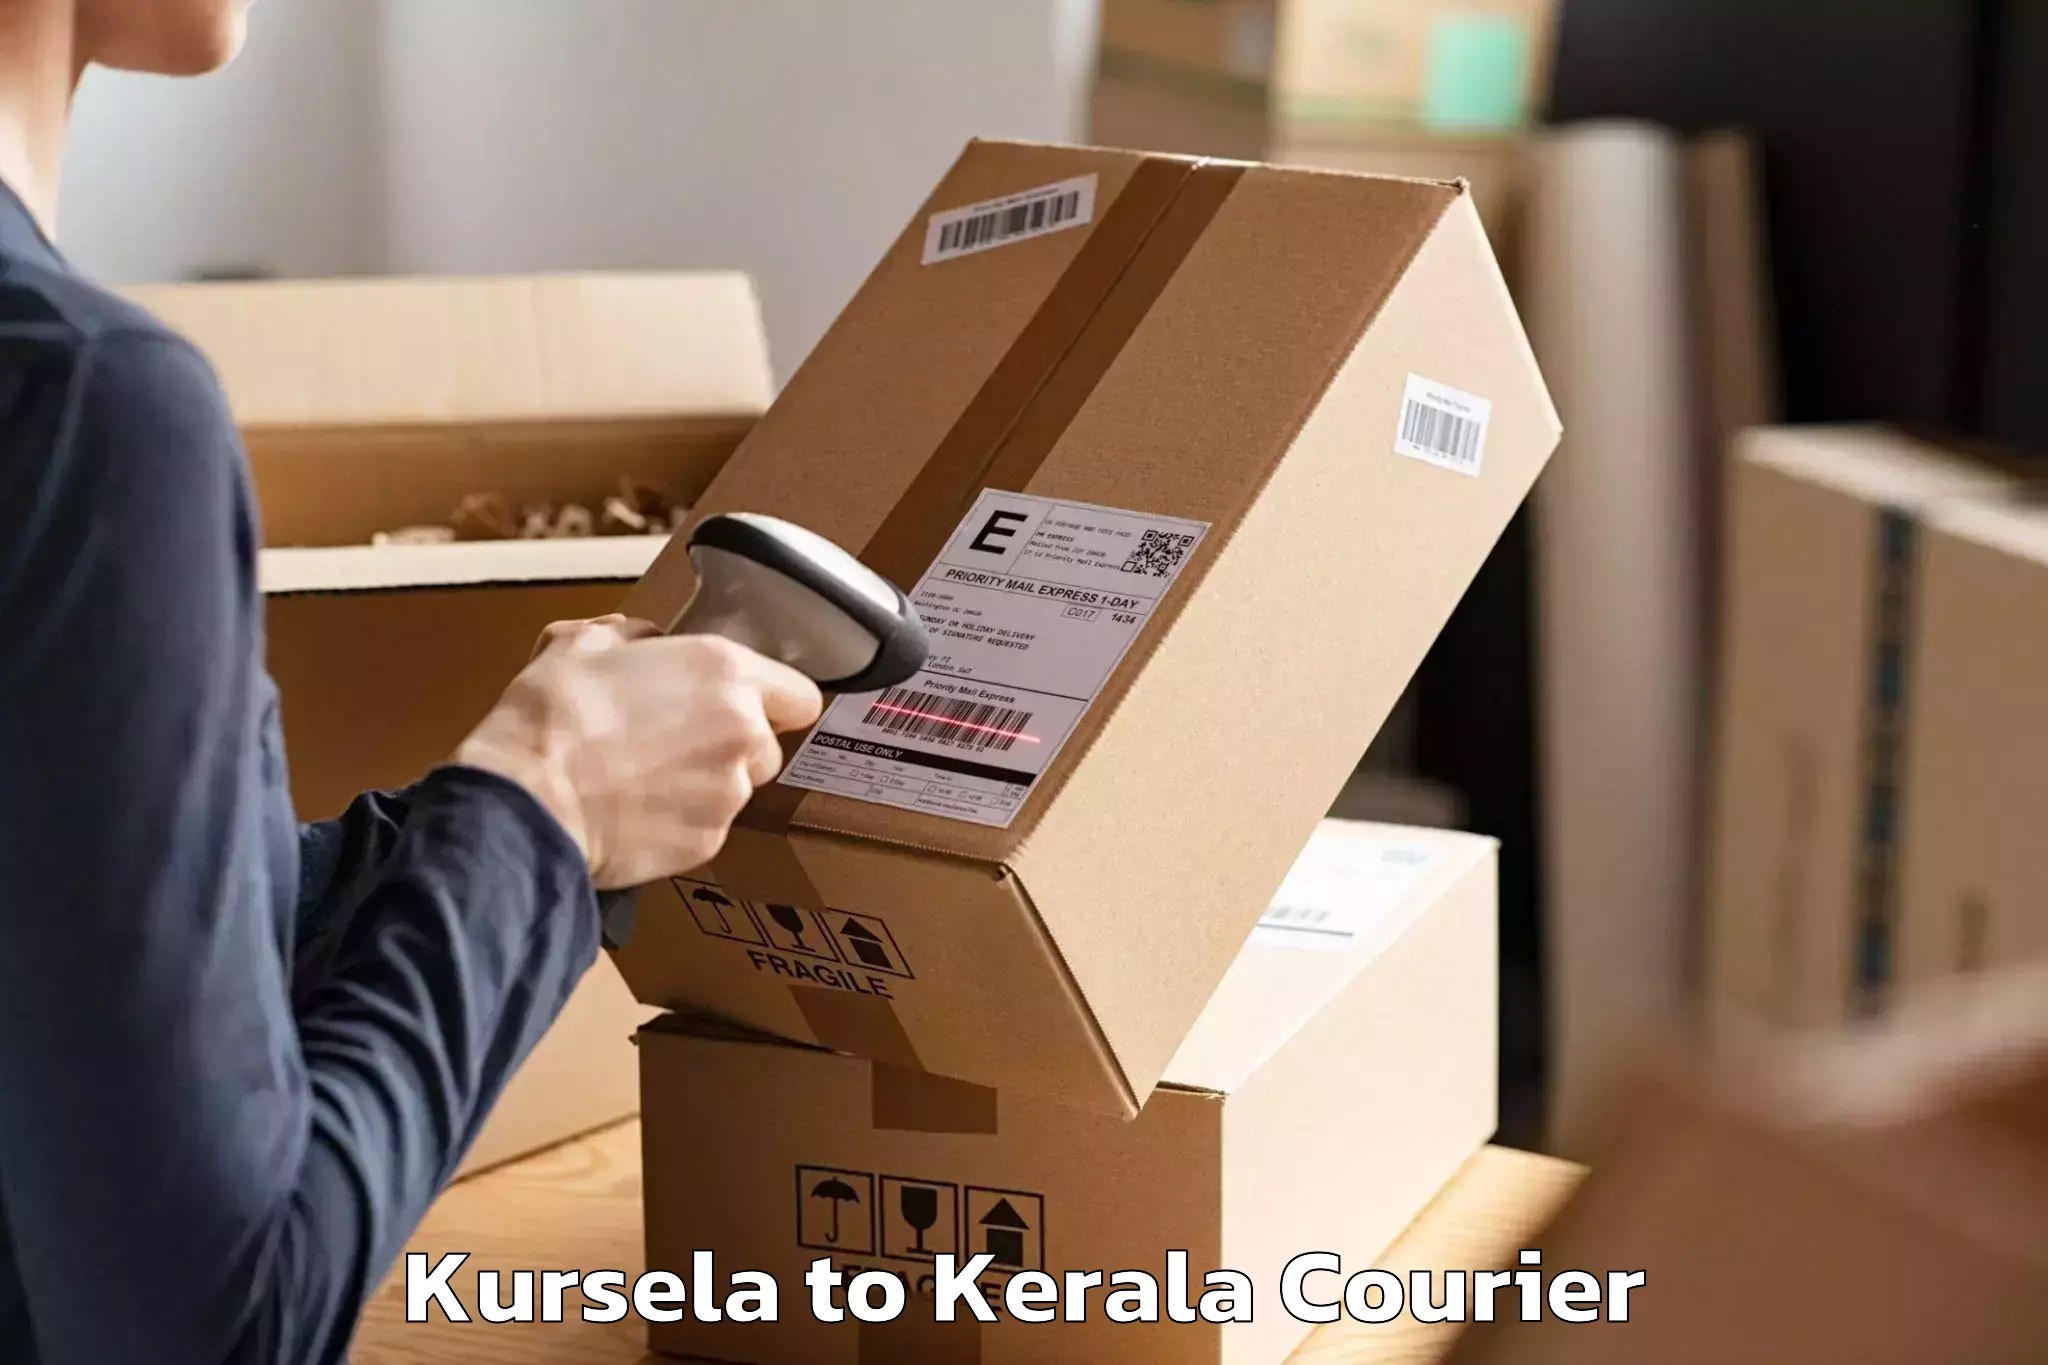 Reliable movers in Kursela to Kottayam